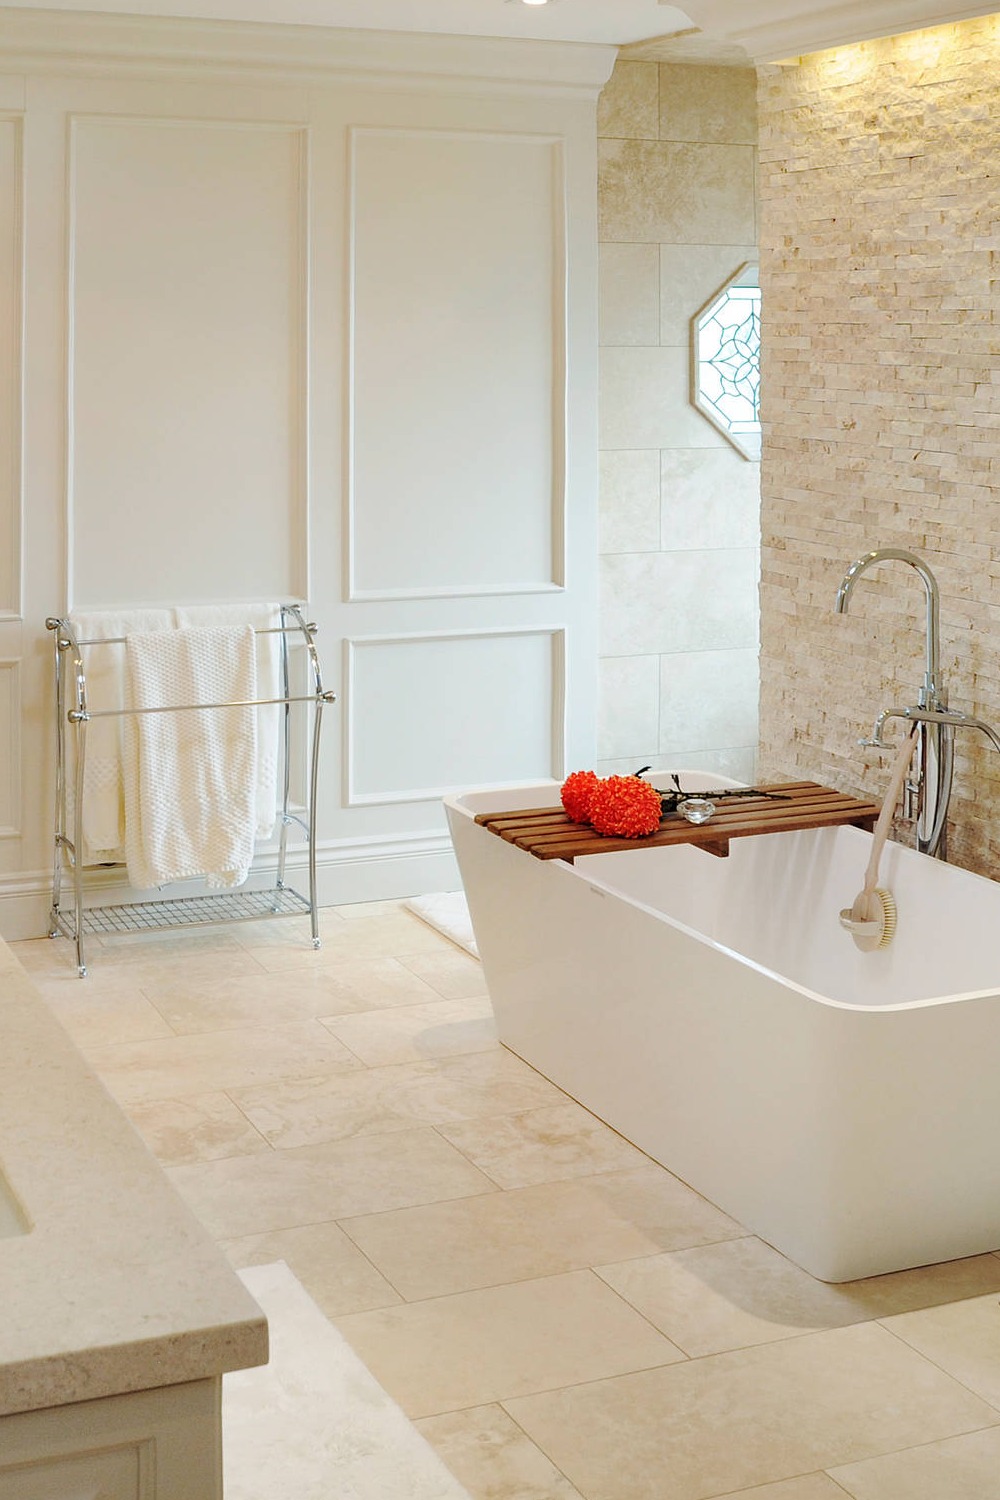 Cream Slate Wall Tiles Travertine Floors Quartz Countertops Free Standing Towel Rack Bathtub